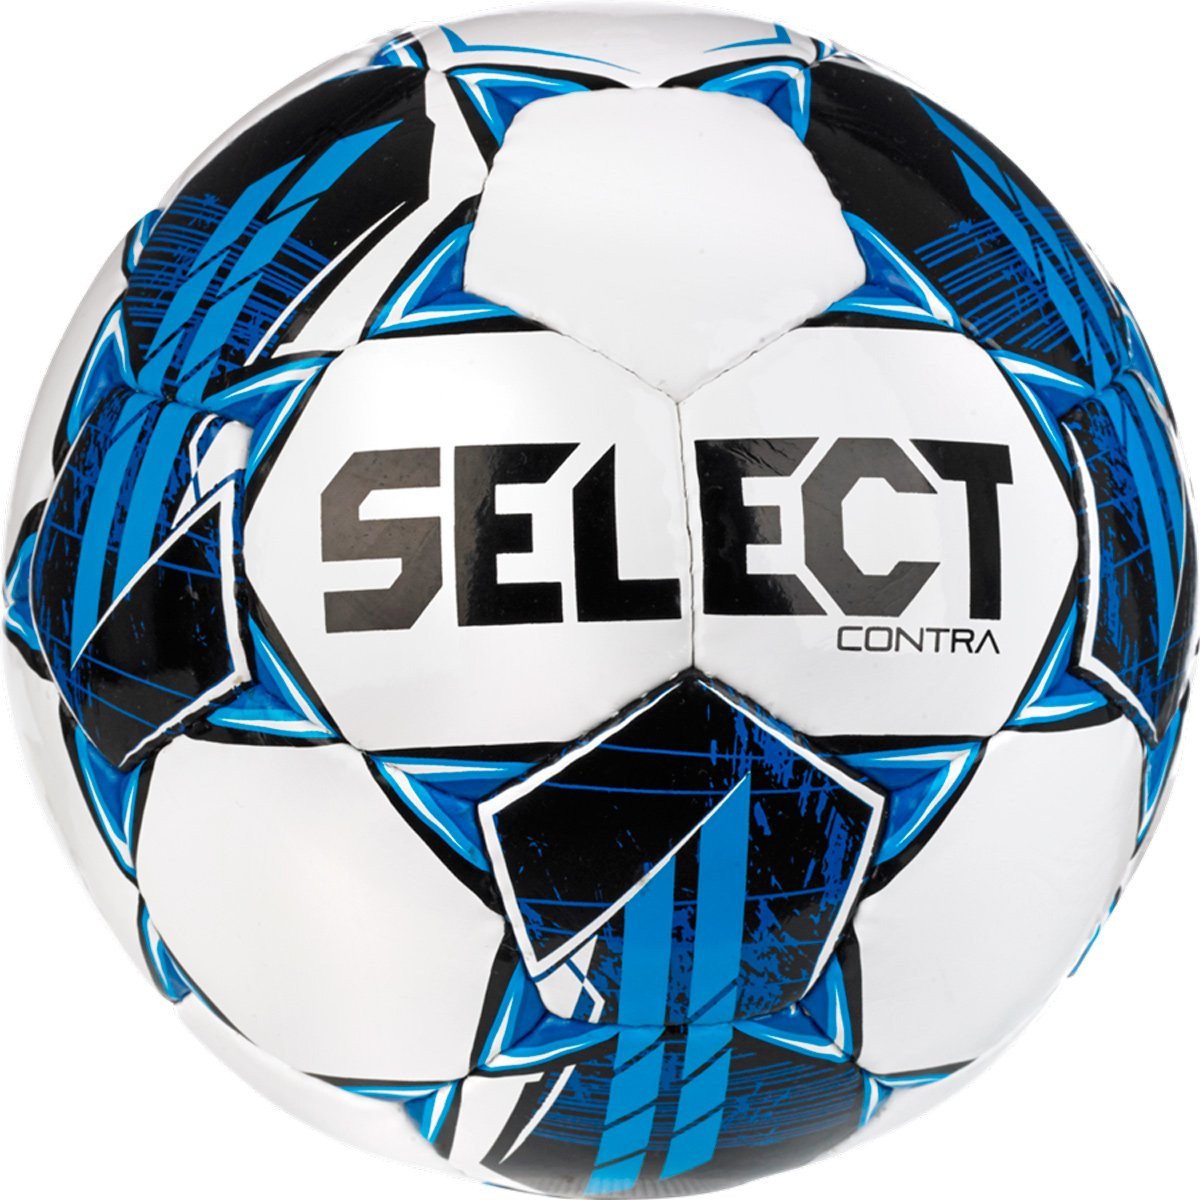 SELECT Contra Version 23 Fodbold